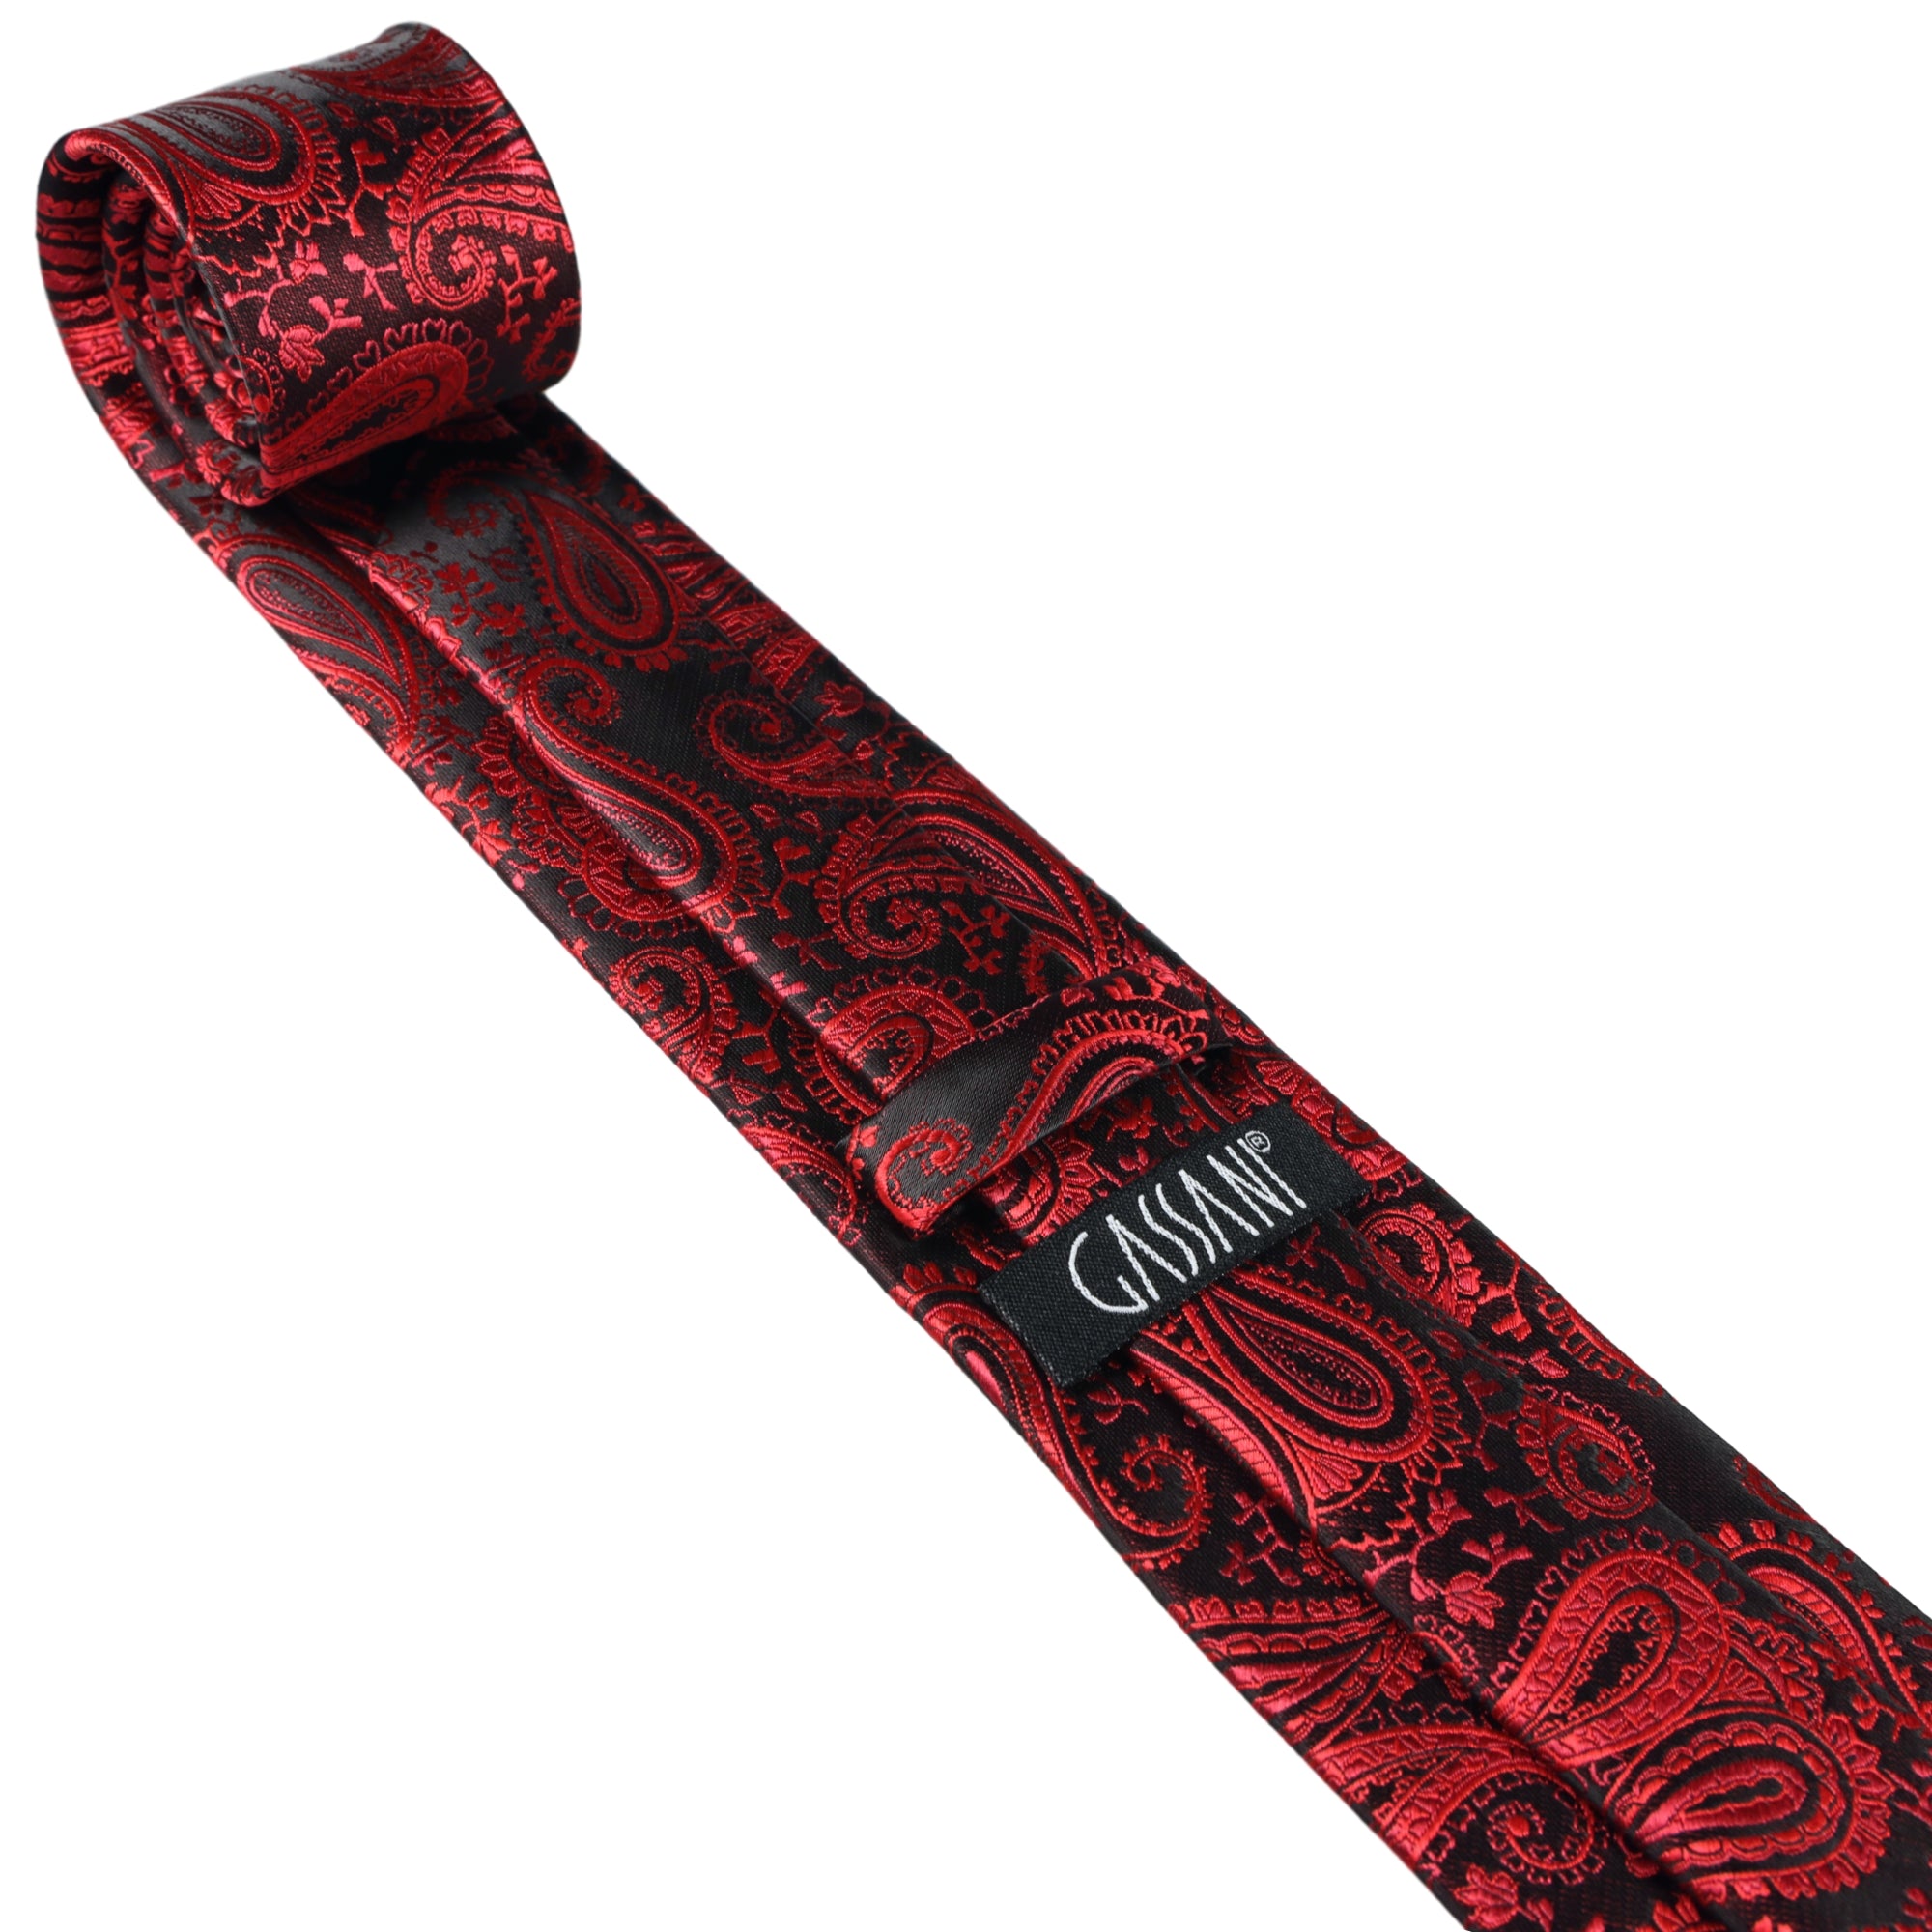 Kaufen Sie Bordeaux-Rote Paisley-Krawatte | Designt f. GASSANIshop.de -  GASSANI Krawatten